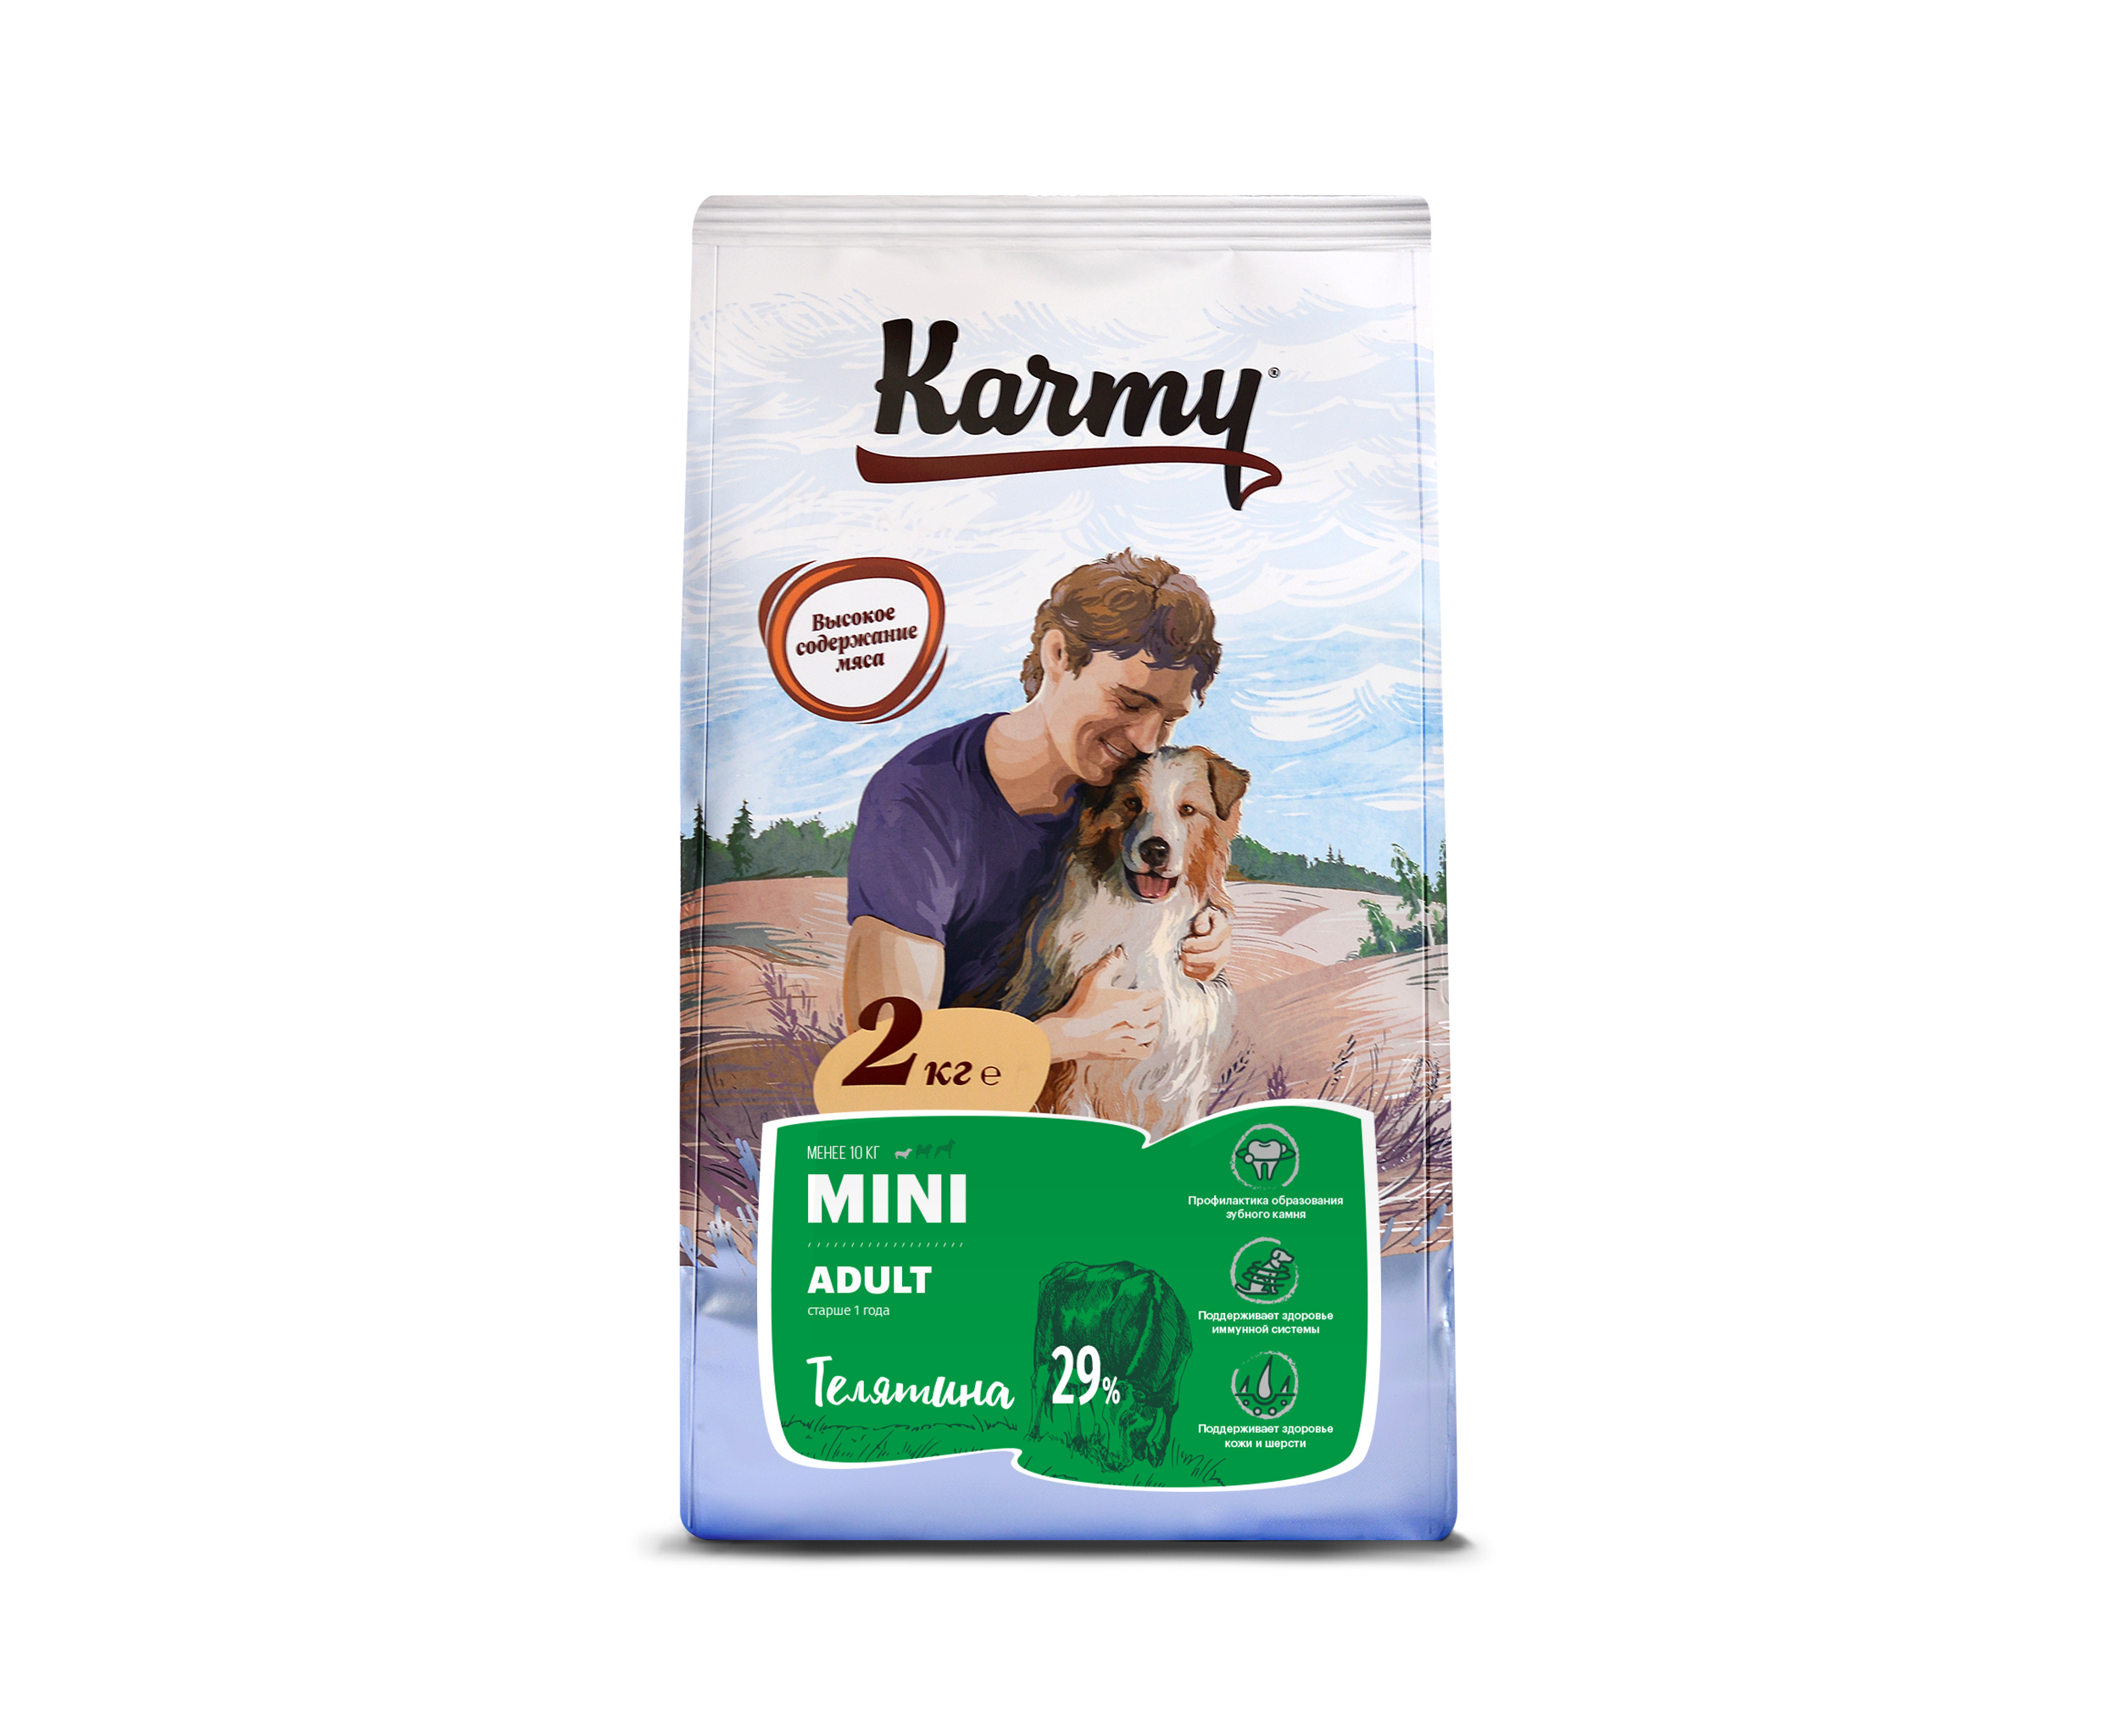 Линейка кормов корм для собак. Корм для собак karmy 15 кг. Karmy сухой корм для щенков 15 кг. Корм Карми Медиум адульт. Корм для собак karmy (15 кг) Medium Adult индейка.